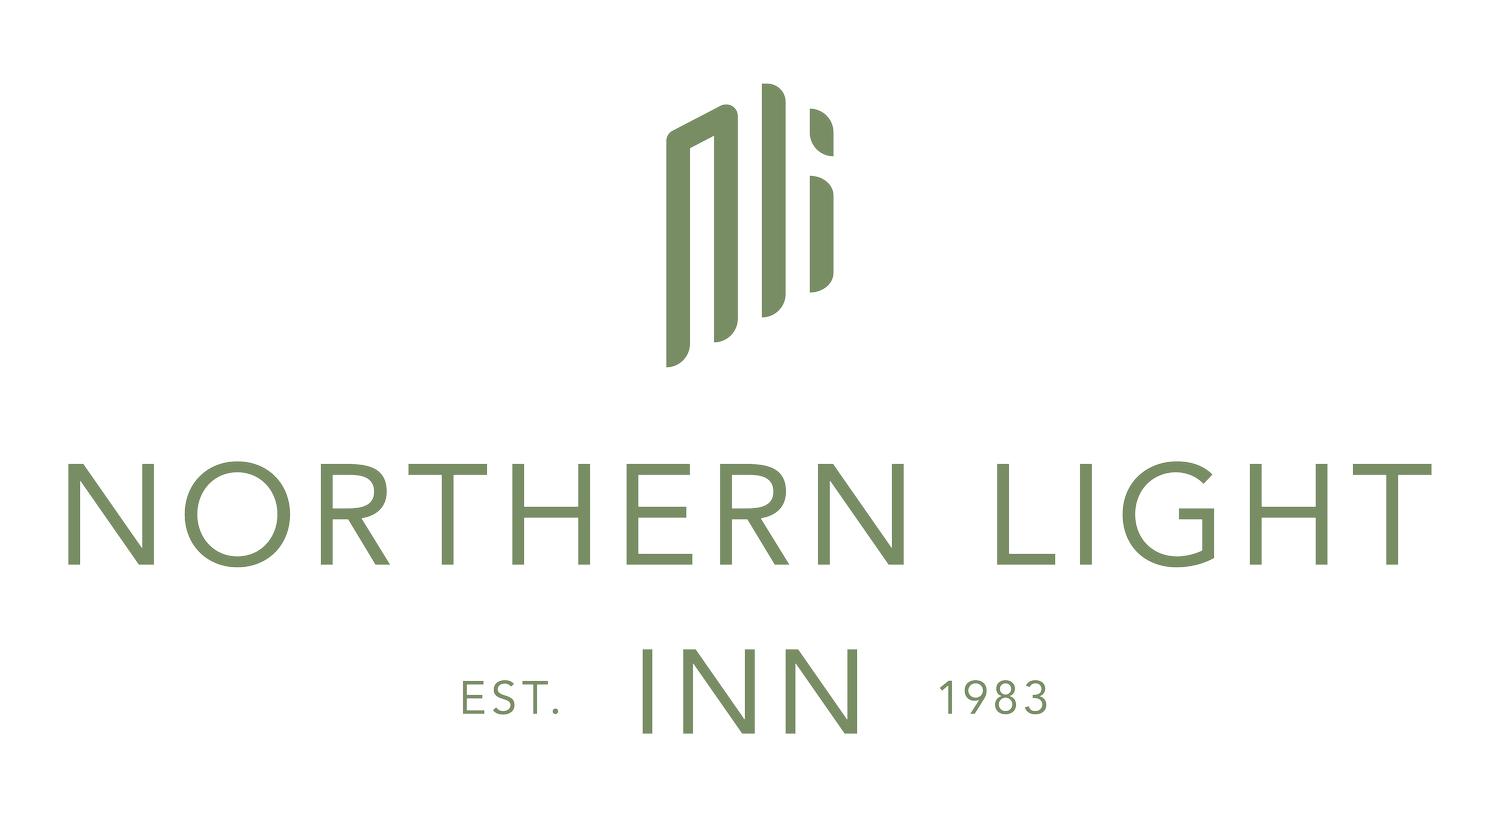 Northern Light Inn